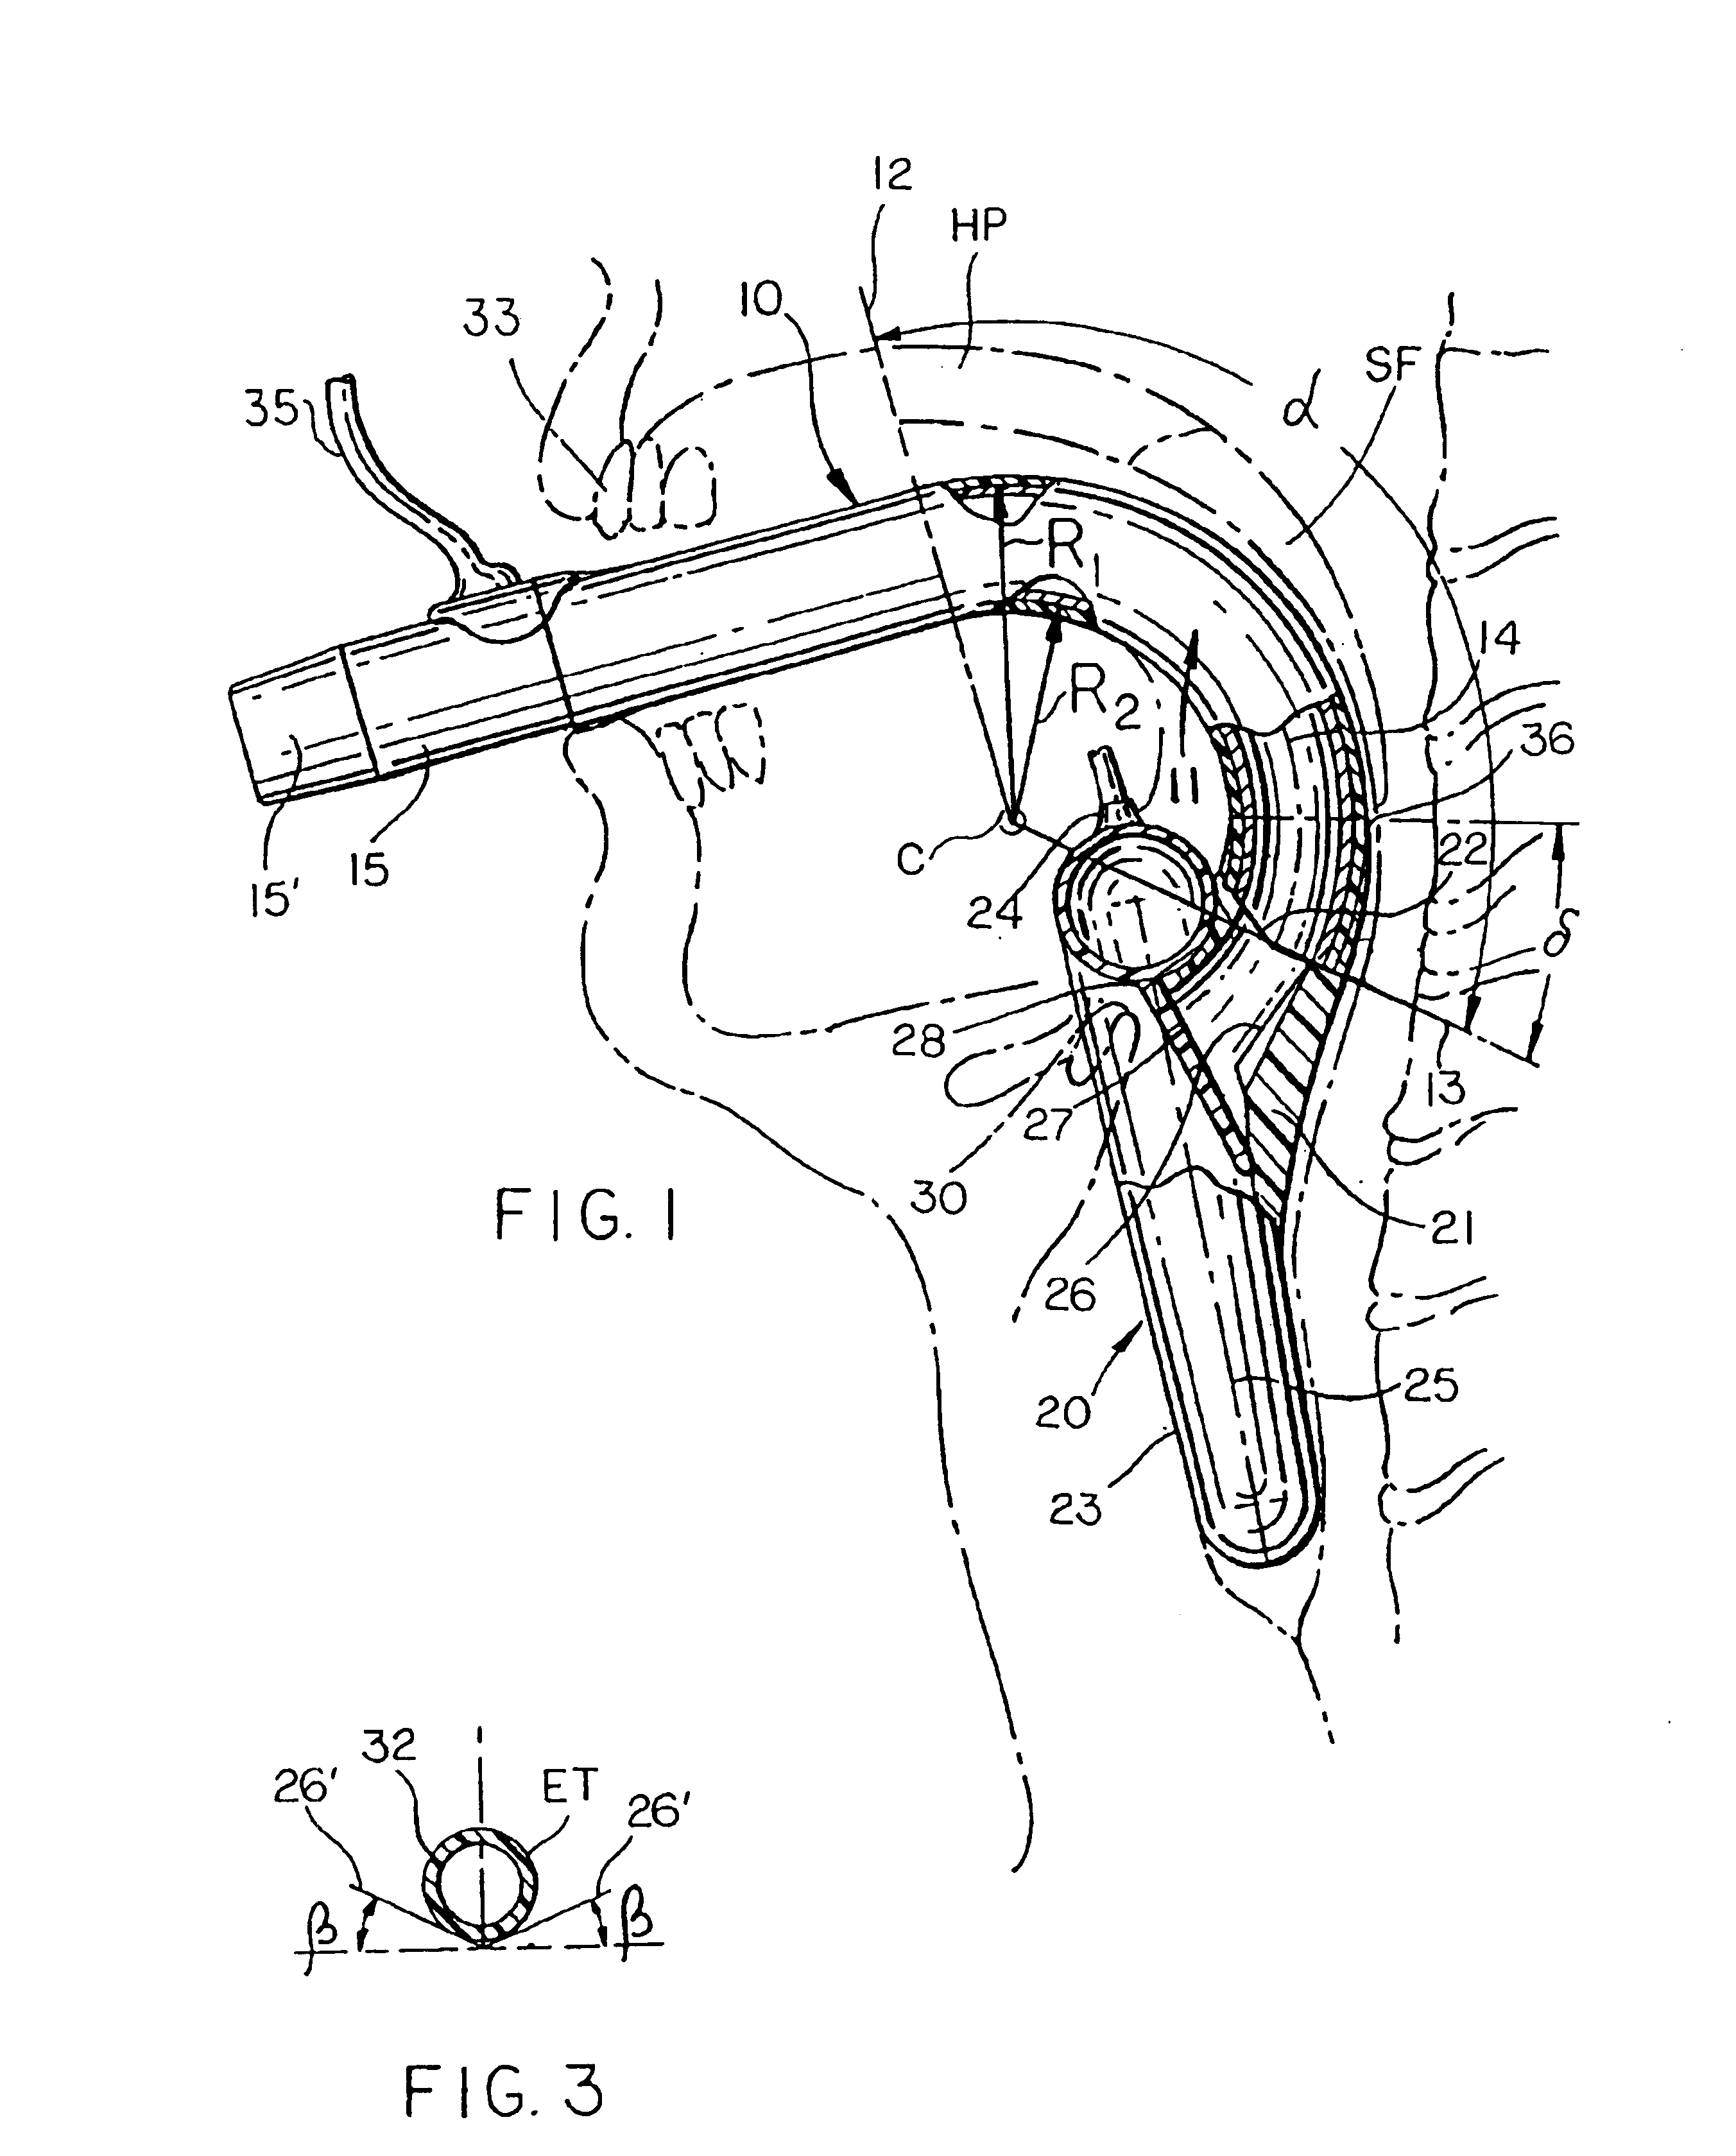 Intubating laryngeal mask